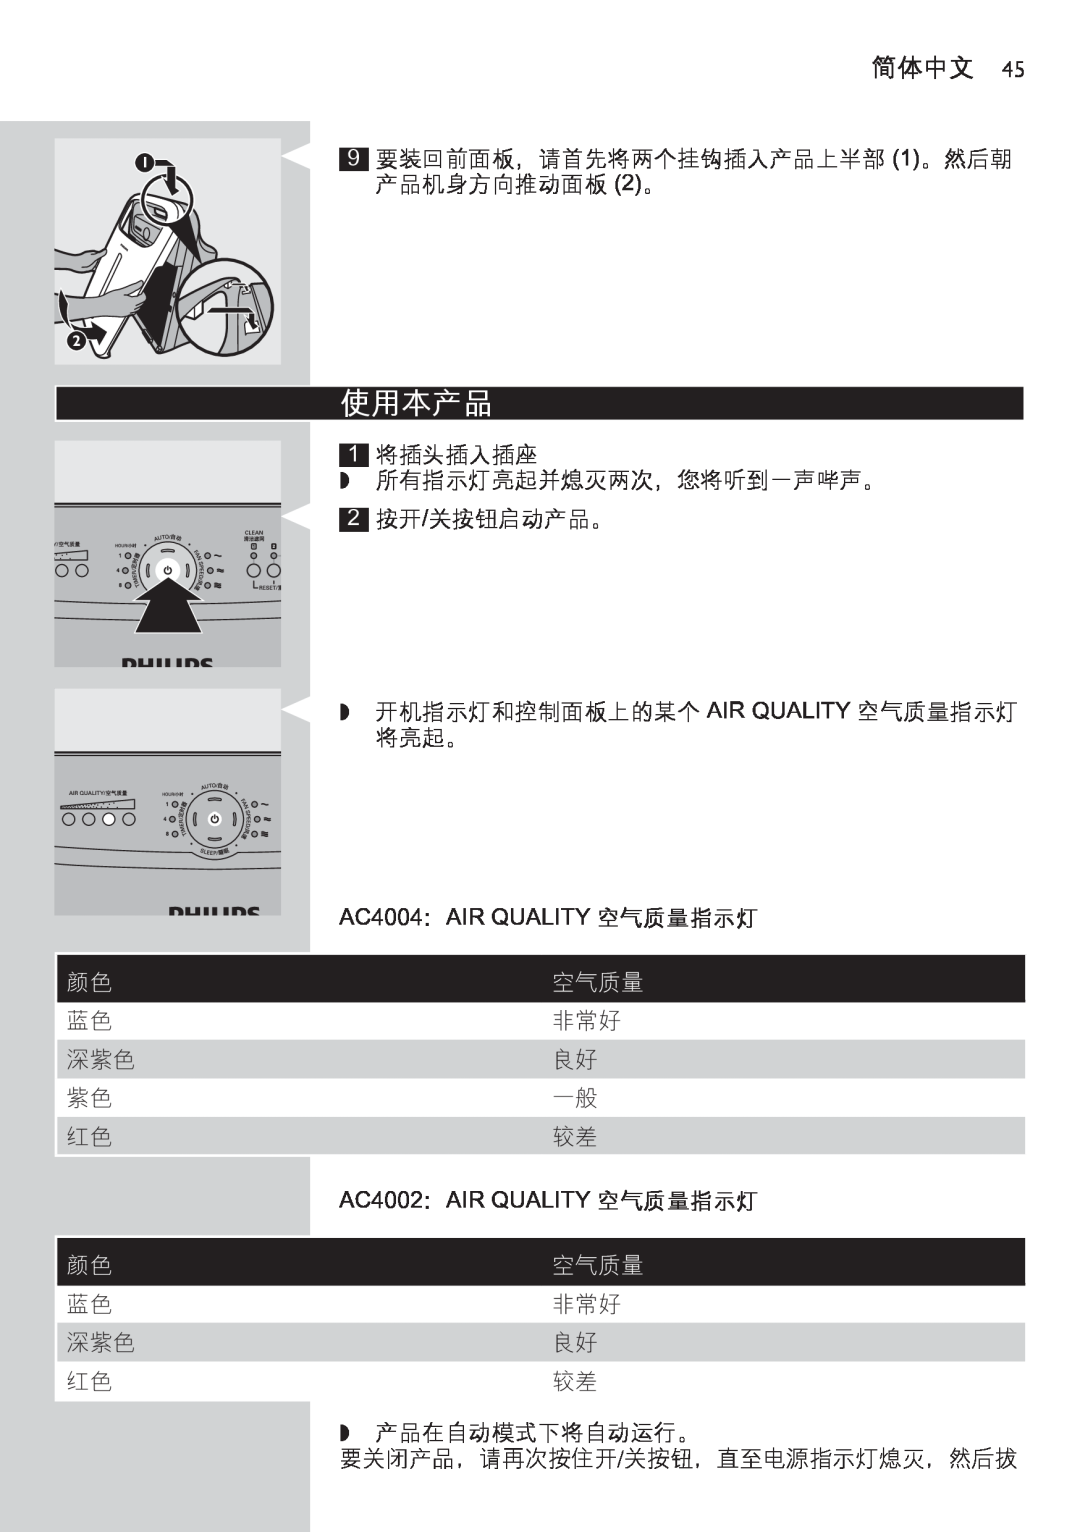 Philips manual 使用本产品, AC4004：AIR QUALITY 空气质量指示灯, AC4002：AIR QUALITY 空气质量指示灯, 简体中文 